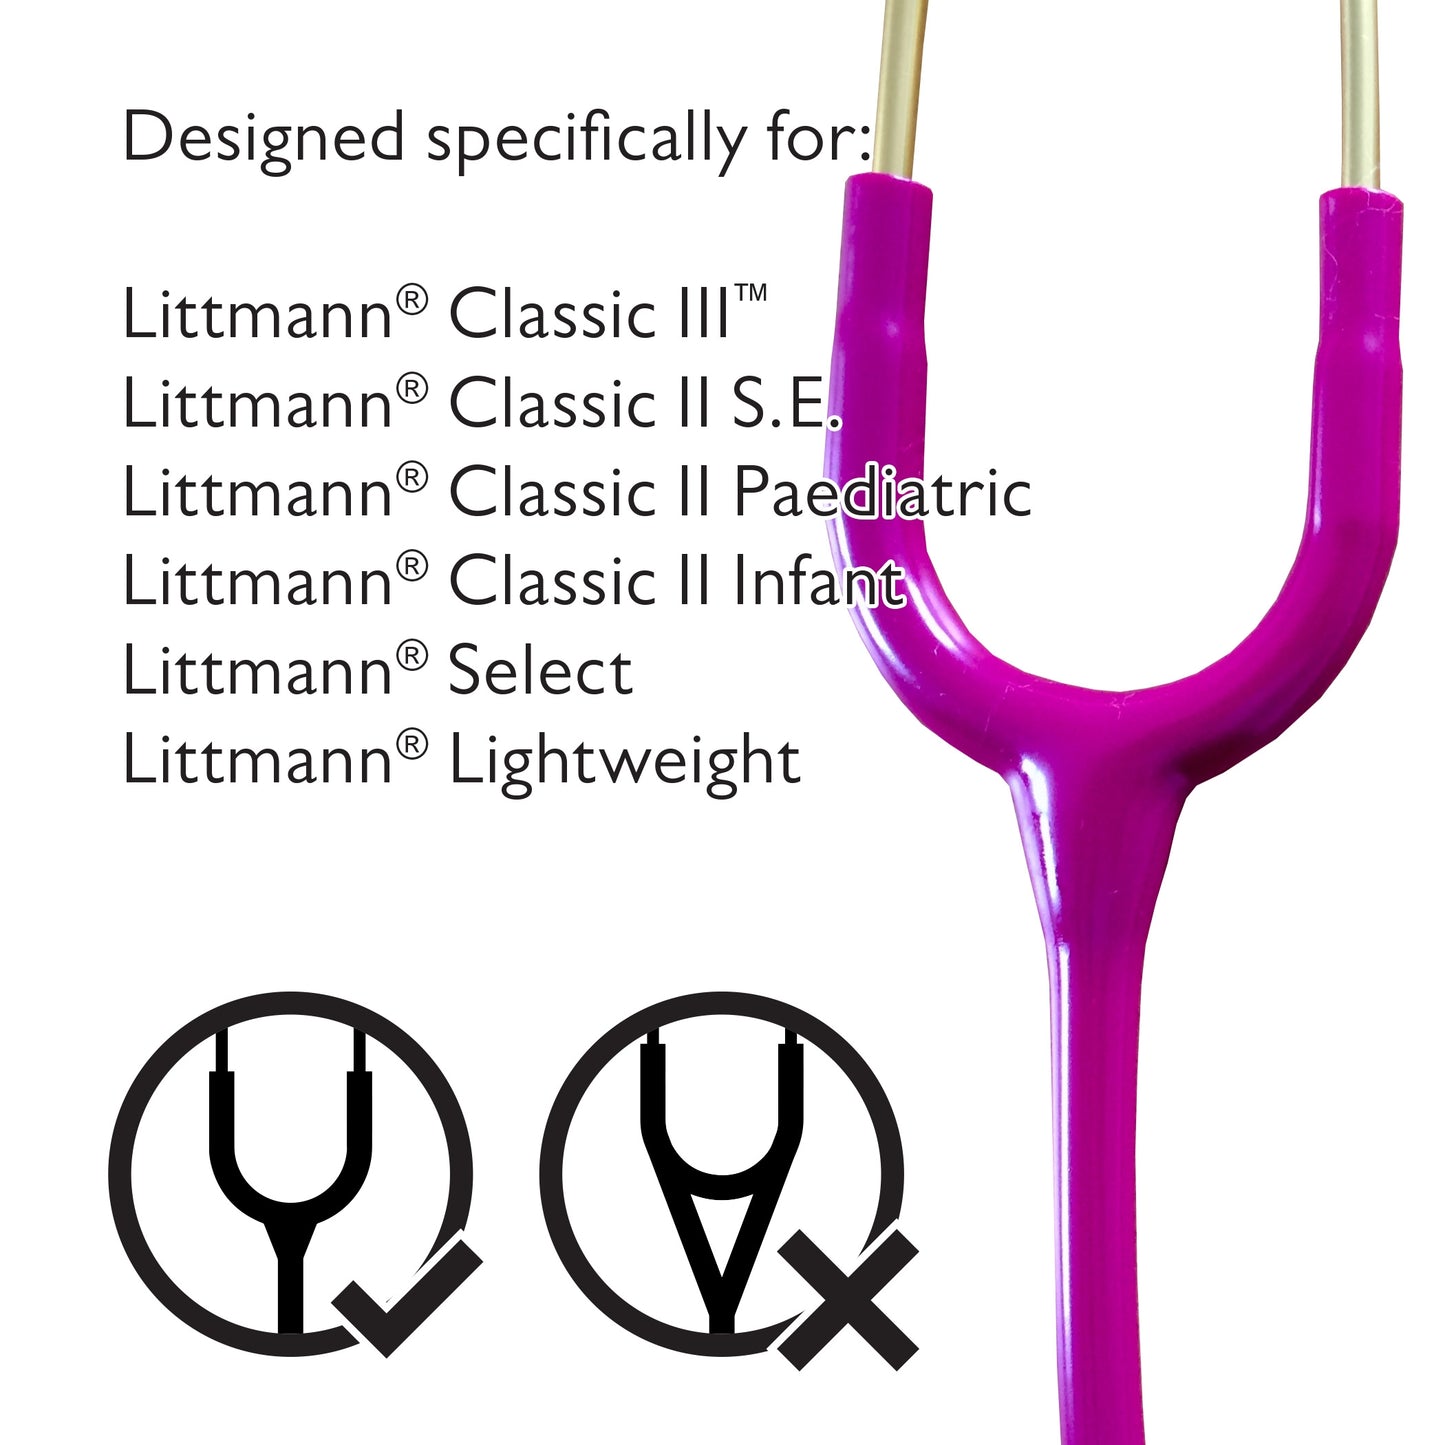 Pod Technical Classicpod Micro Stethoscope Case for Littmann Classic Stethoscopes - Smoke  Pod Technical Specialist Cases   